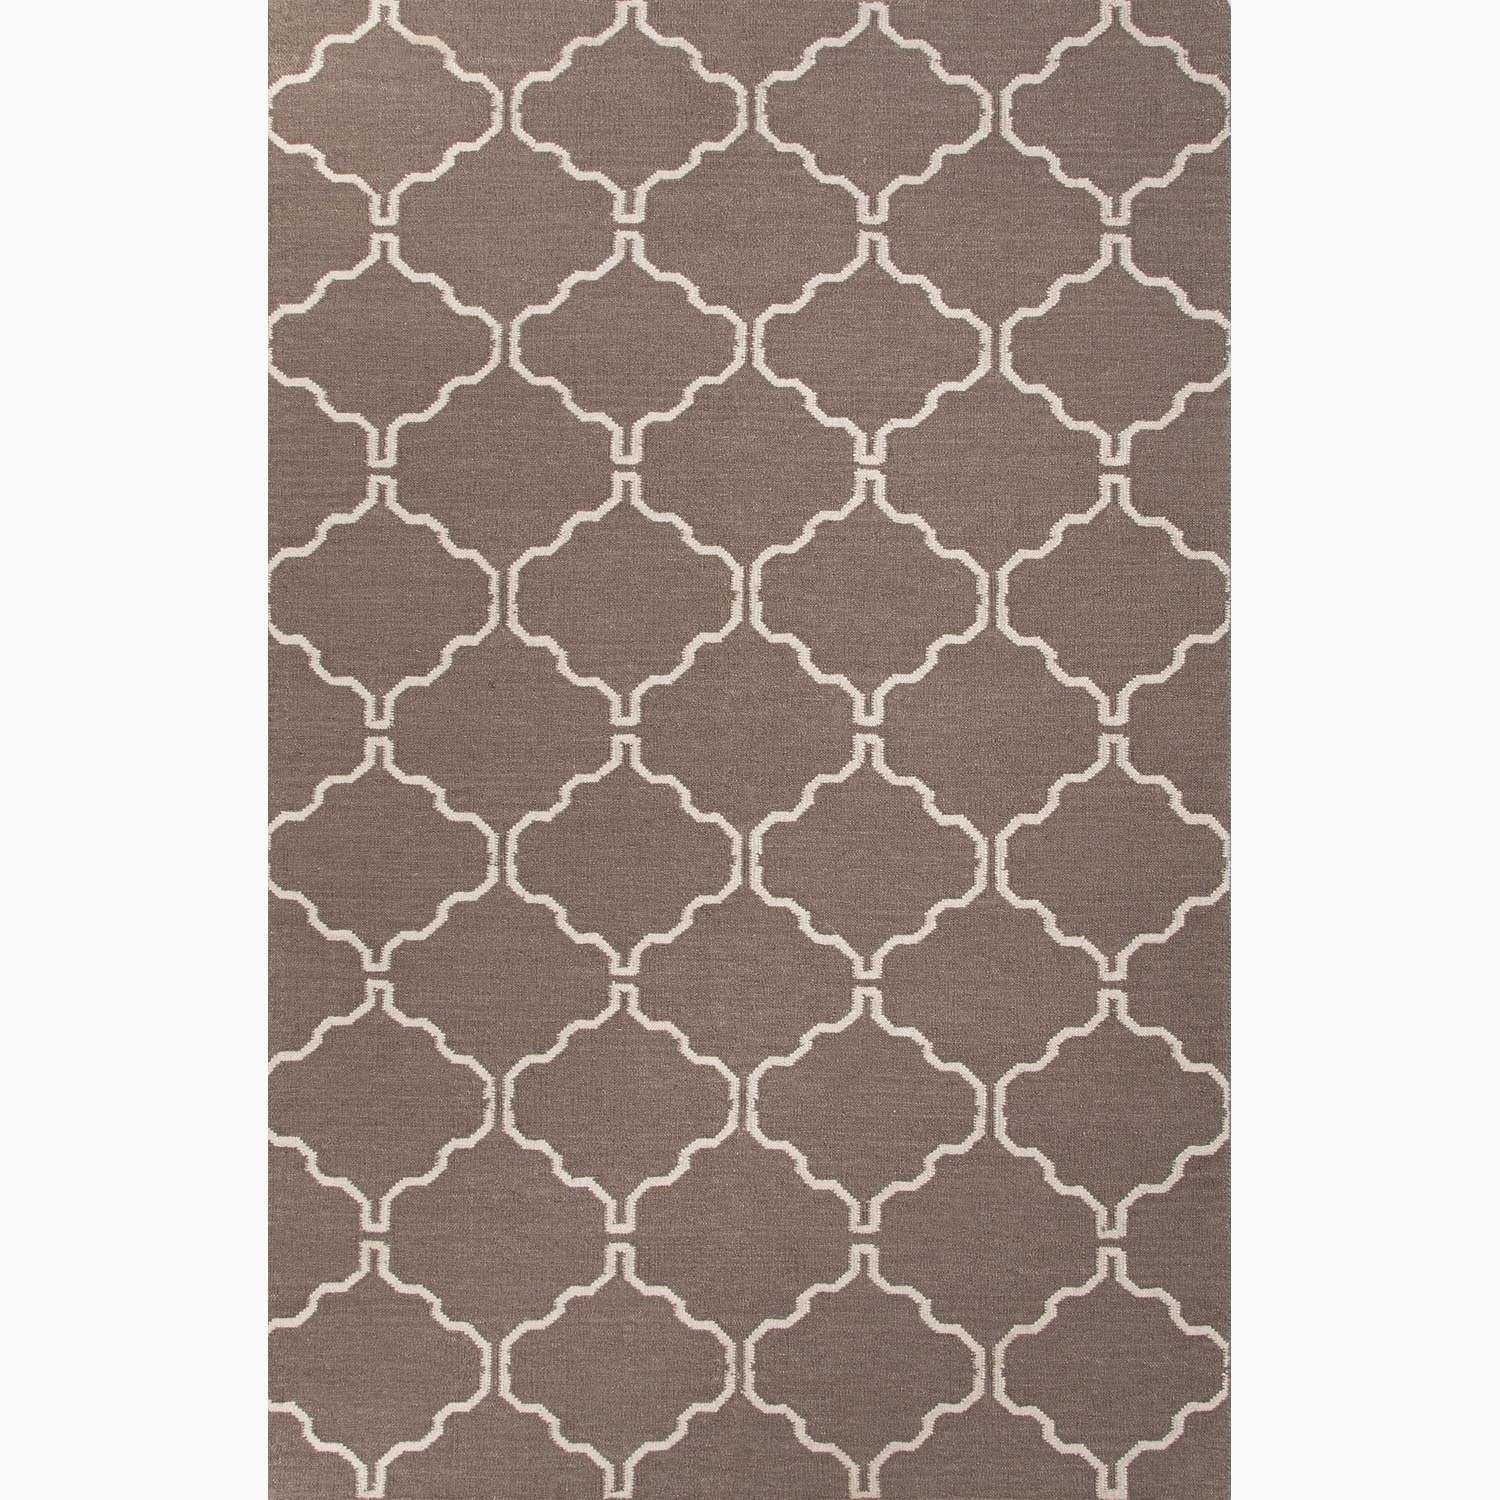 Handmade Gray/ Ivory Moroccan pattern Wool Area Rug (36 X 56)